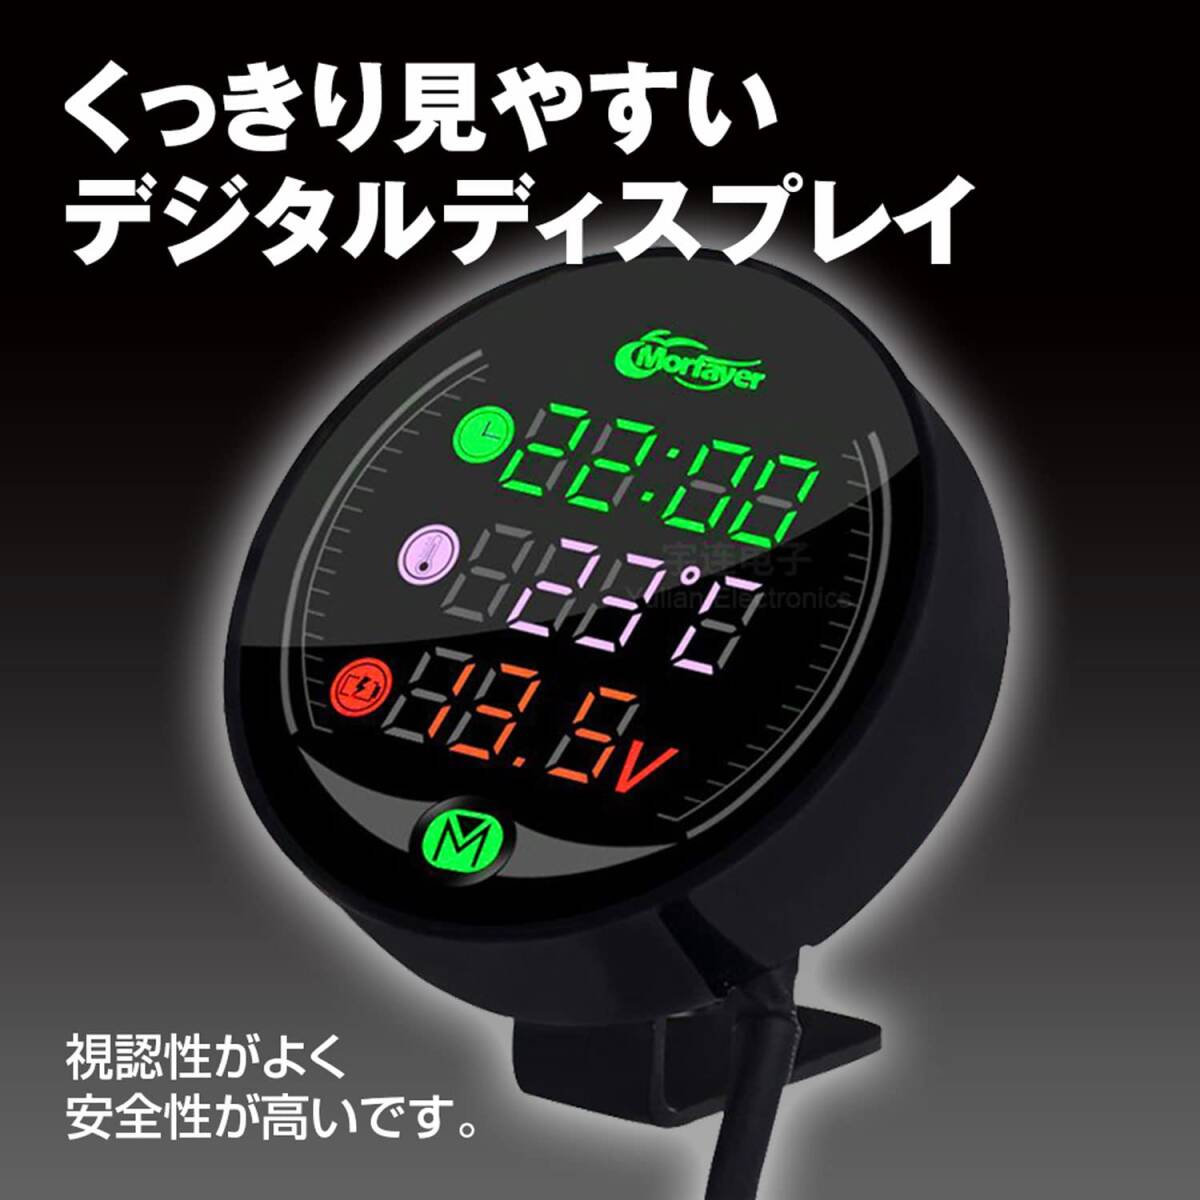 B-MAT01 マルチメーター バイク デジタルメーター 電圧計 温度計 時計 防水 防塵仕様 LED デジタル表示 コンパクト _画像3